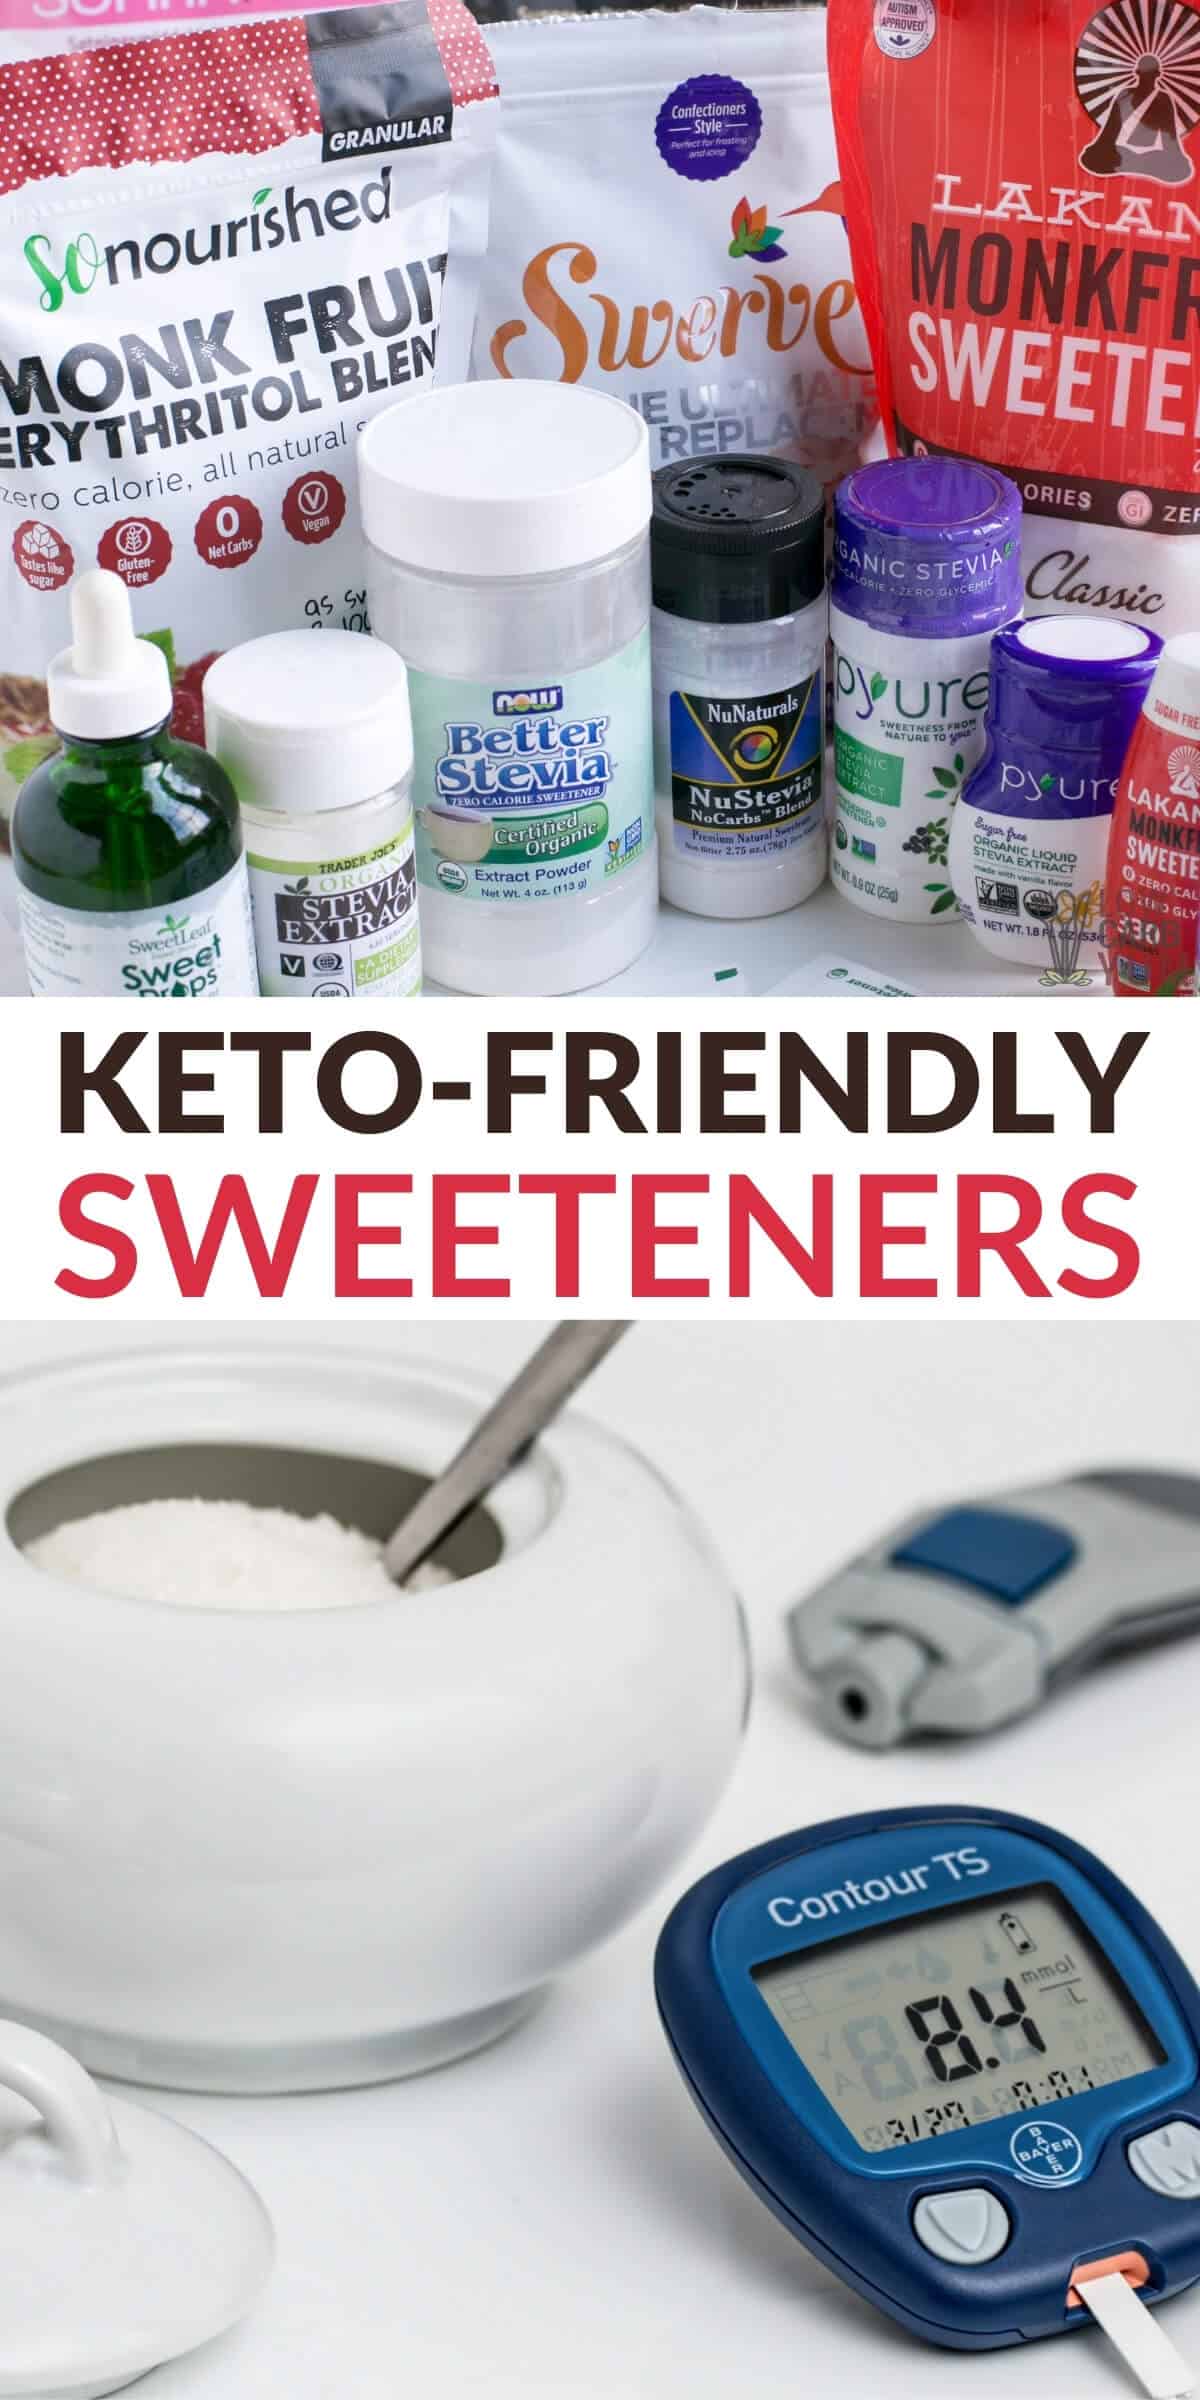 keto-friendly sweetener sugar substitutes